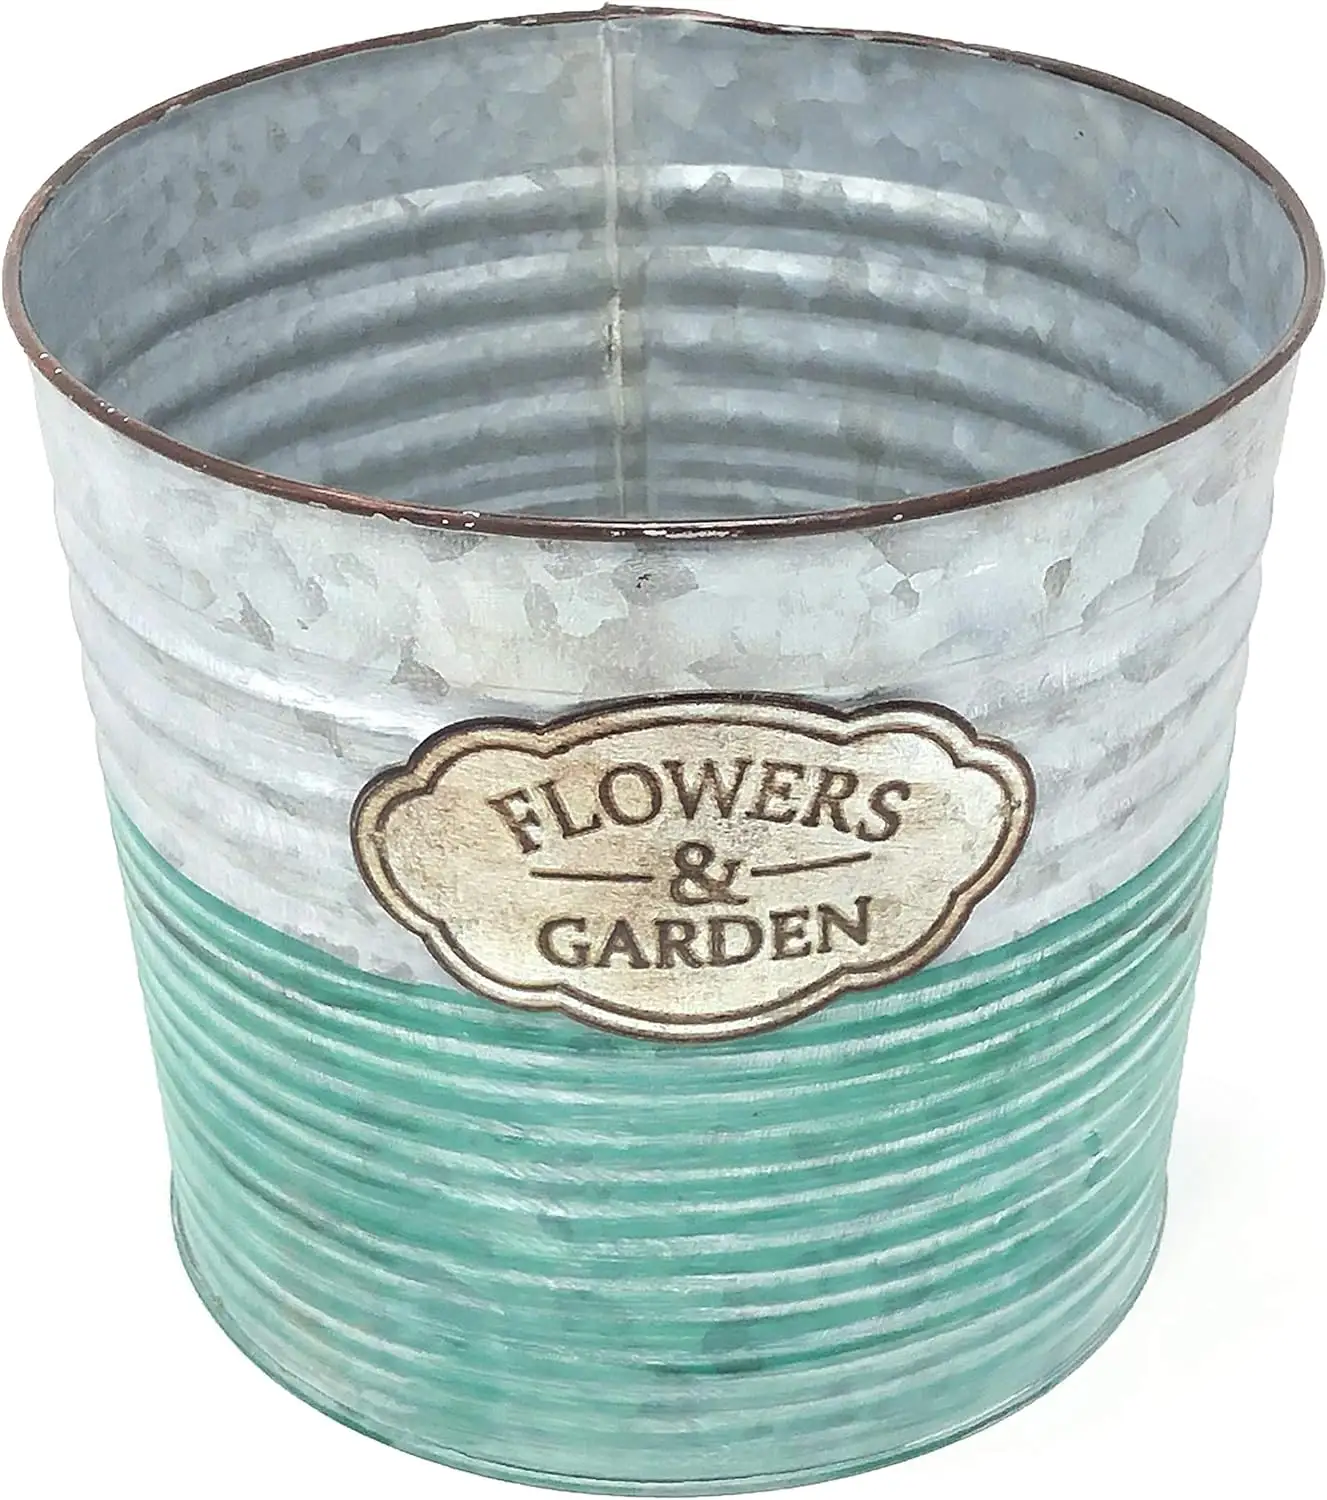 Oval shape Metal Zinc Galvanized Flower Pots Garden Planters Available At wholesale Price